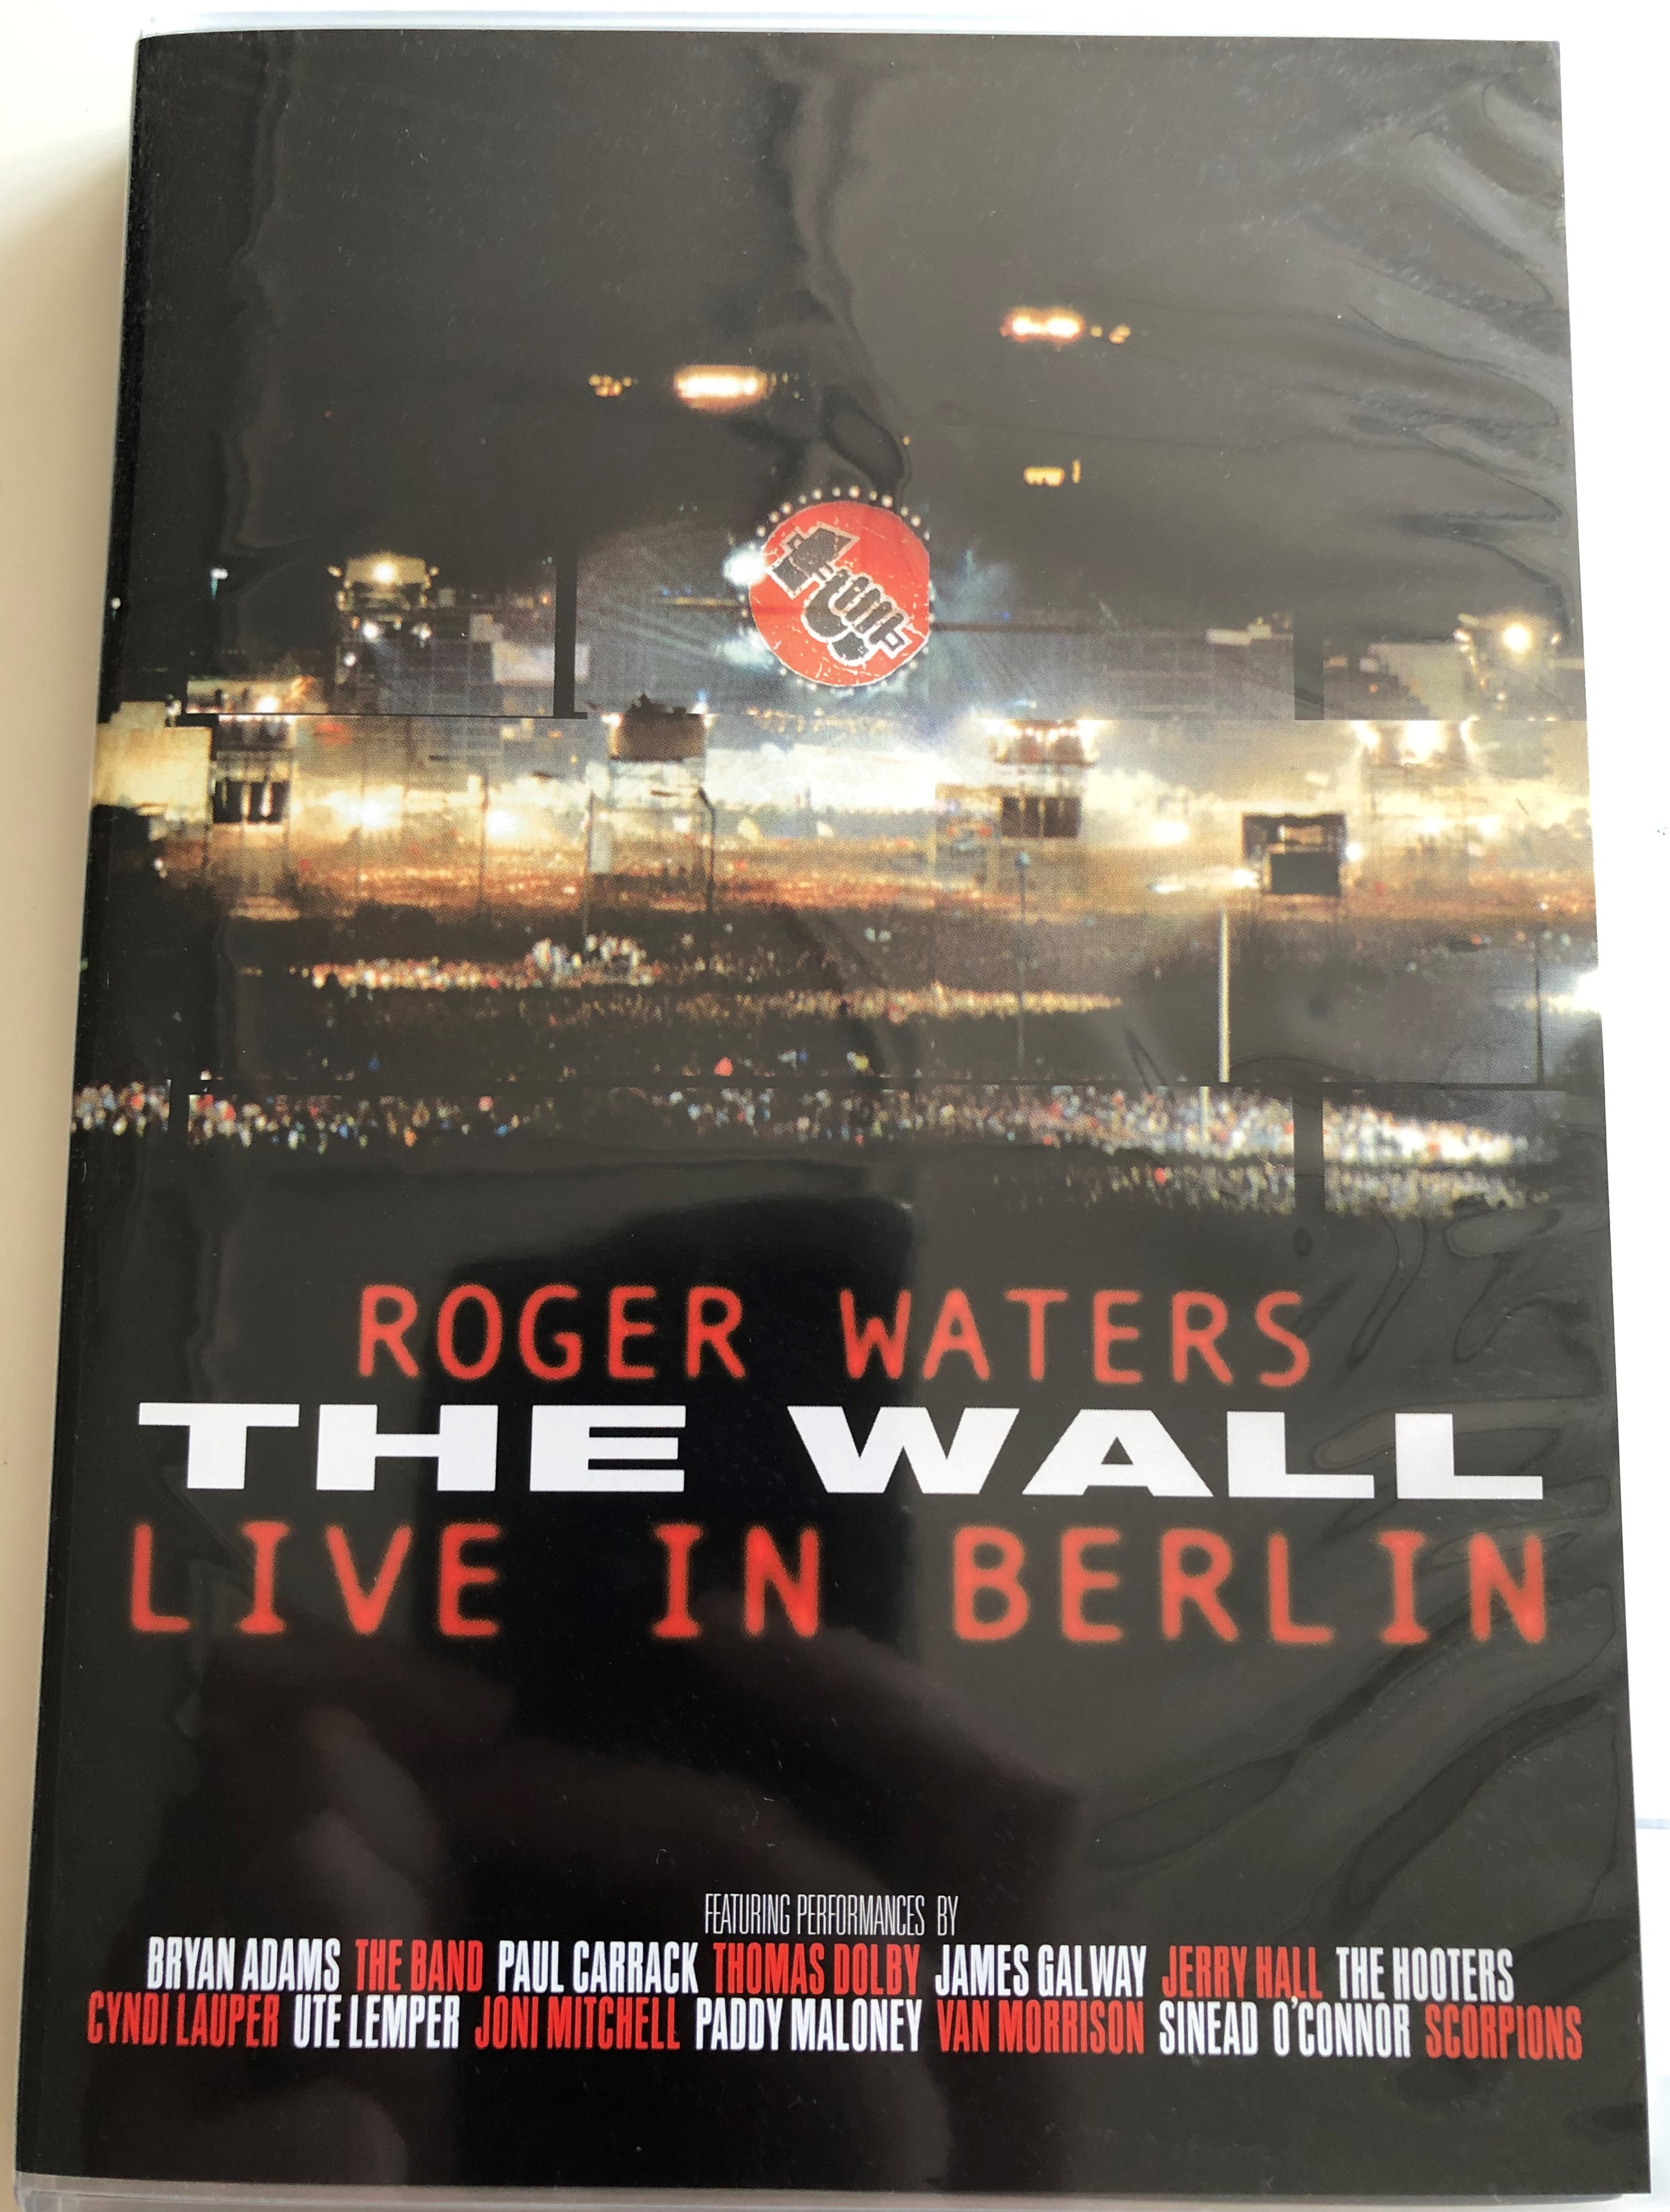 Roger Waters The Wall DVD 2003 Live in Berlin / Featuring Bryan Adams, The  Hooters, Cyndi Lauper, Van Morrison, Scorpions - bibleinmylanguage